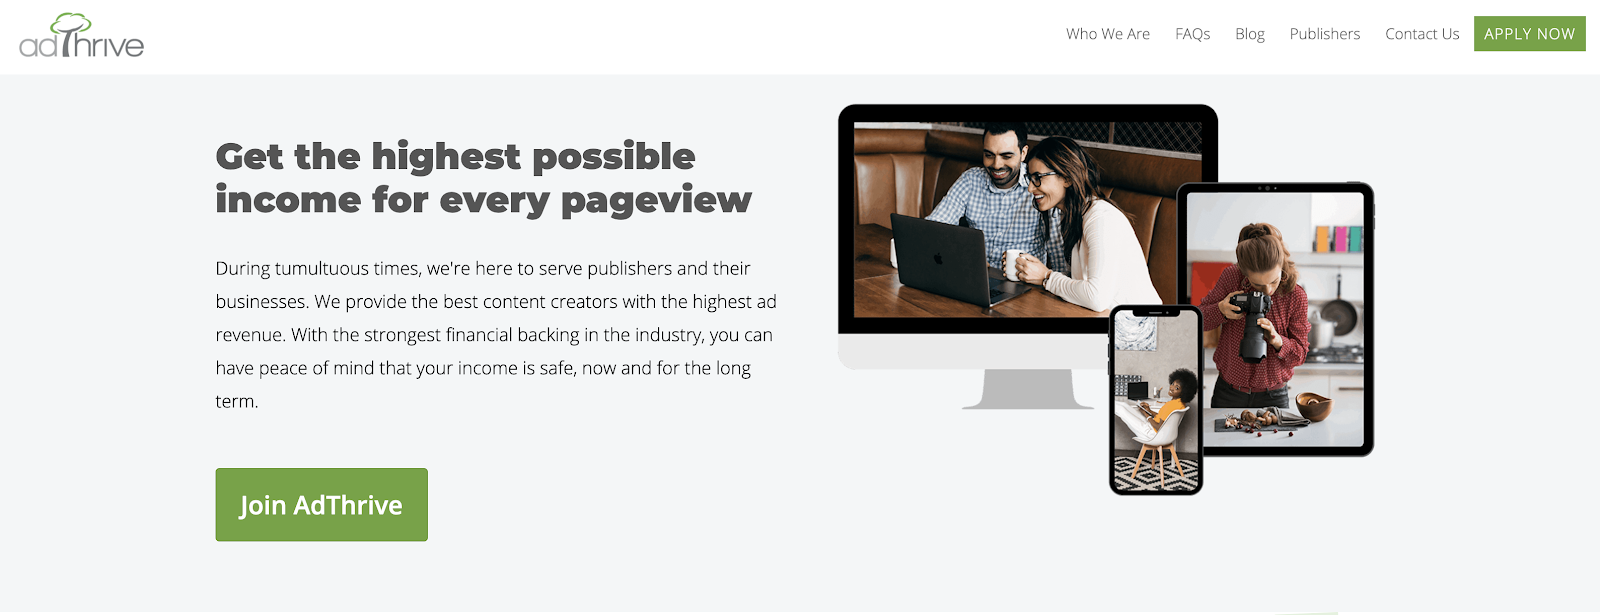 AdThrive Blog Ads Network (Homepage Screenshot)